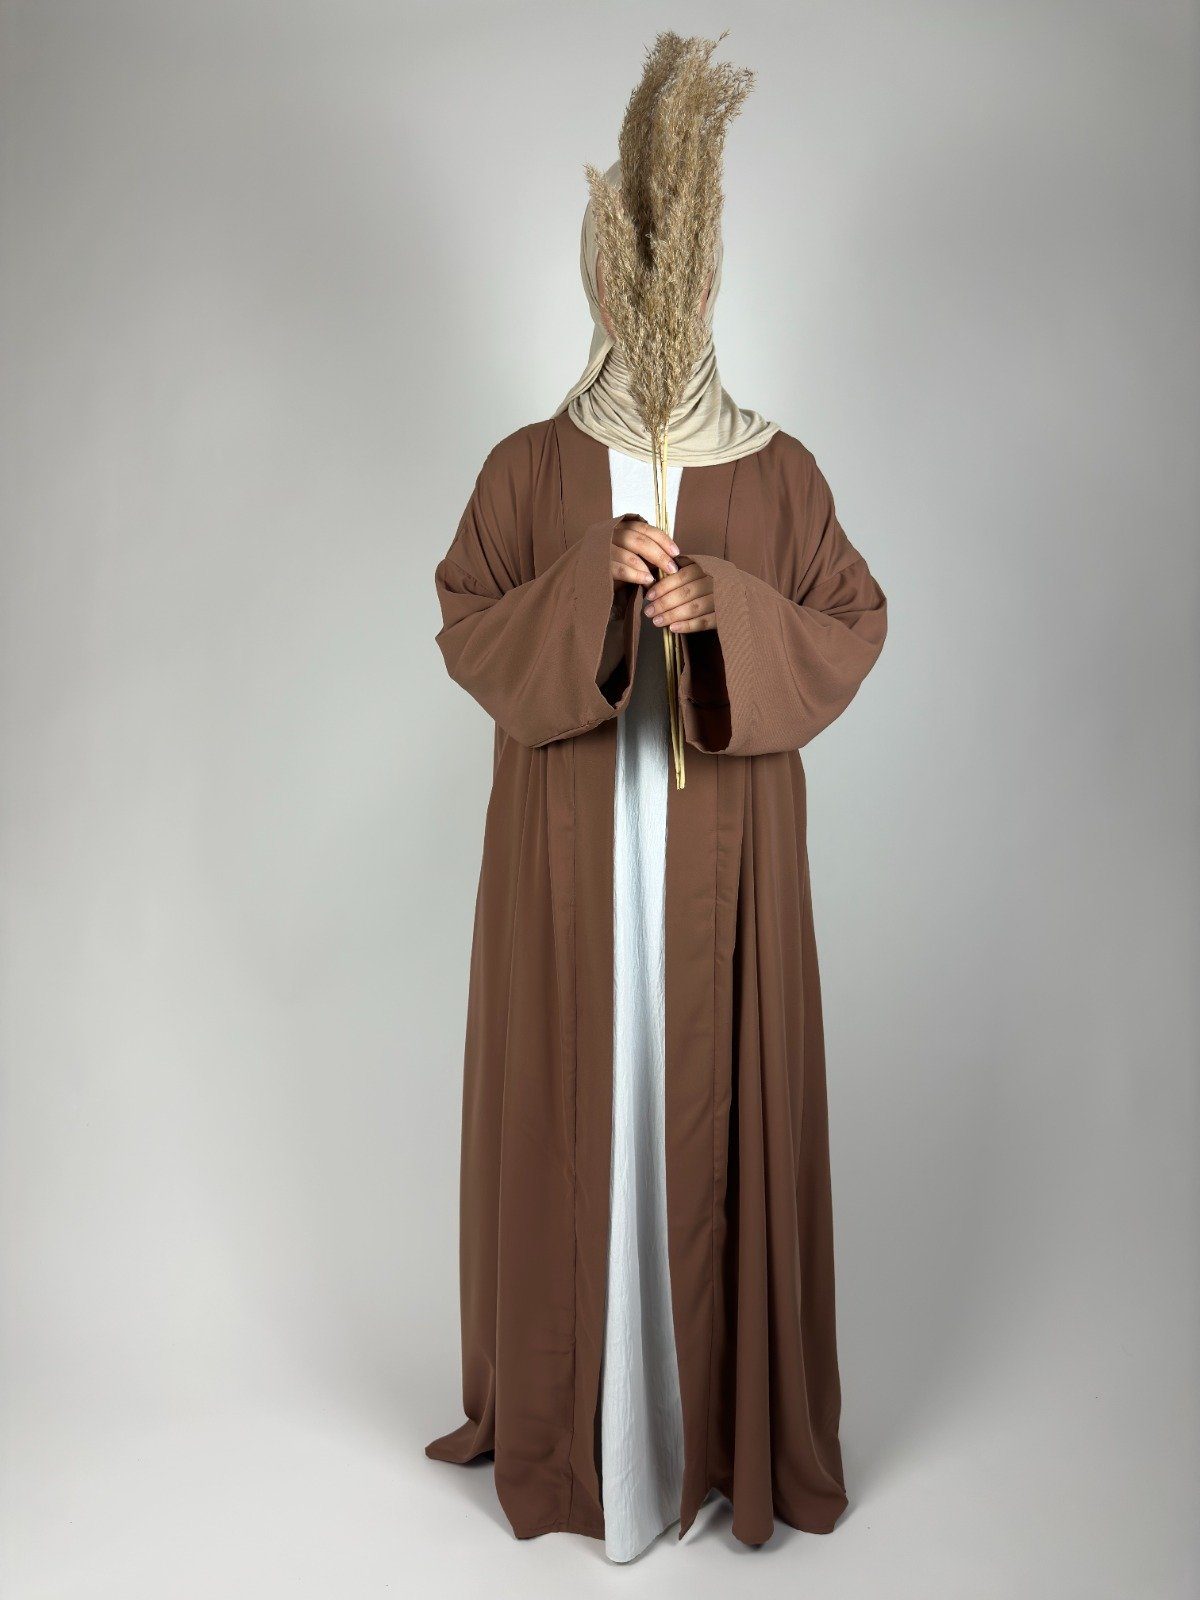 islamische Aymasal Gebetskleidung camel Cardigan Kimono Abaya Maxikleid Kaftan Hafsa Kleidung